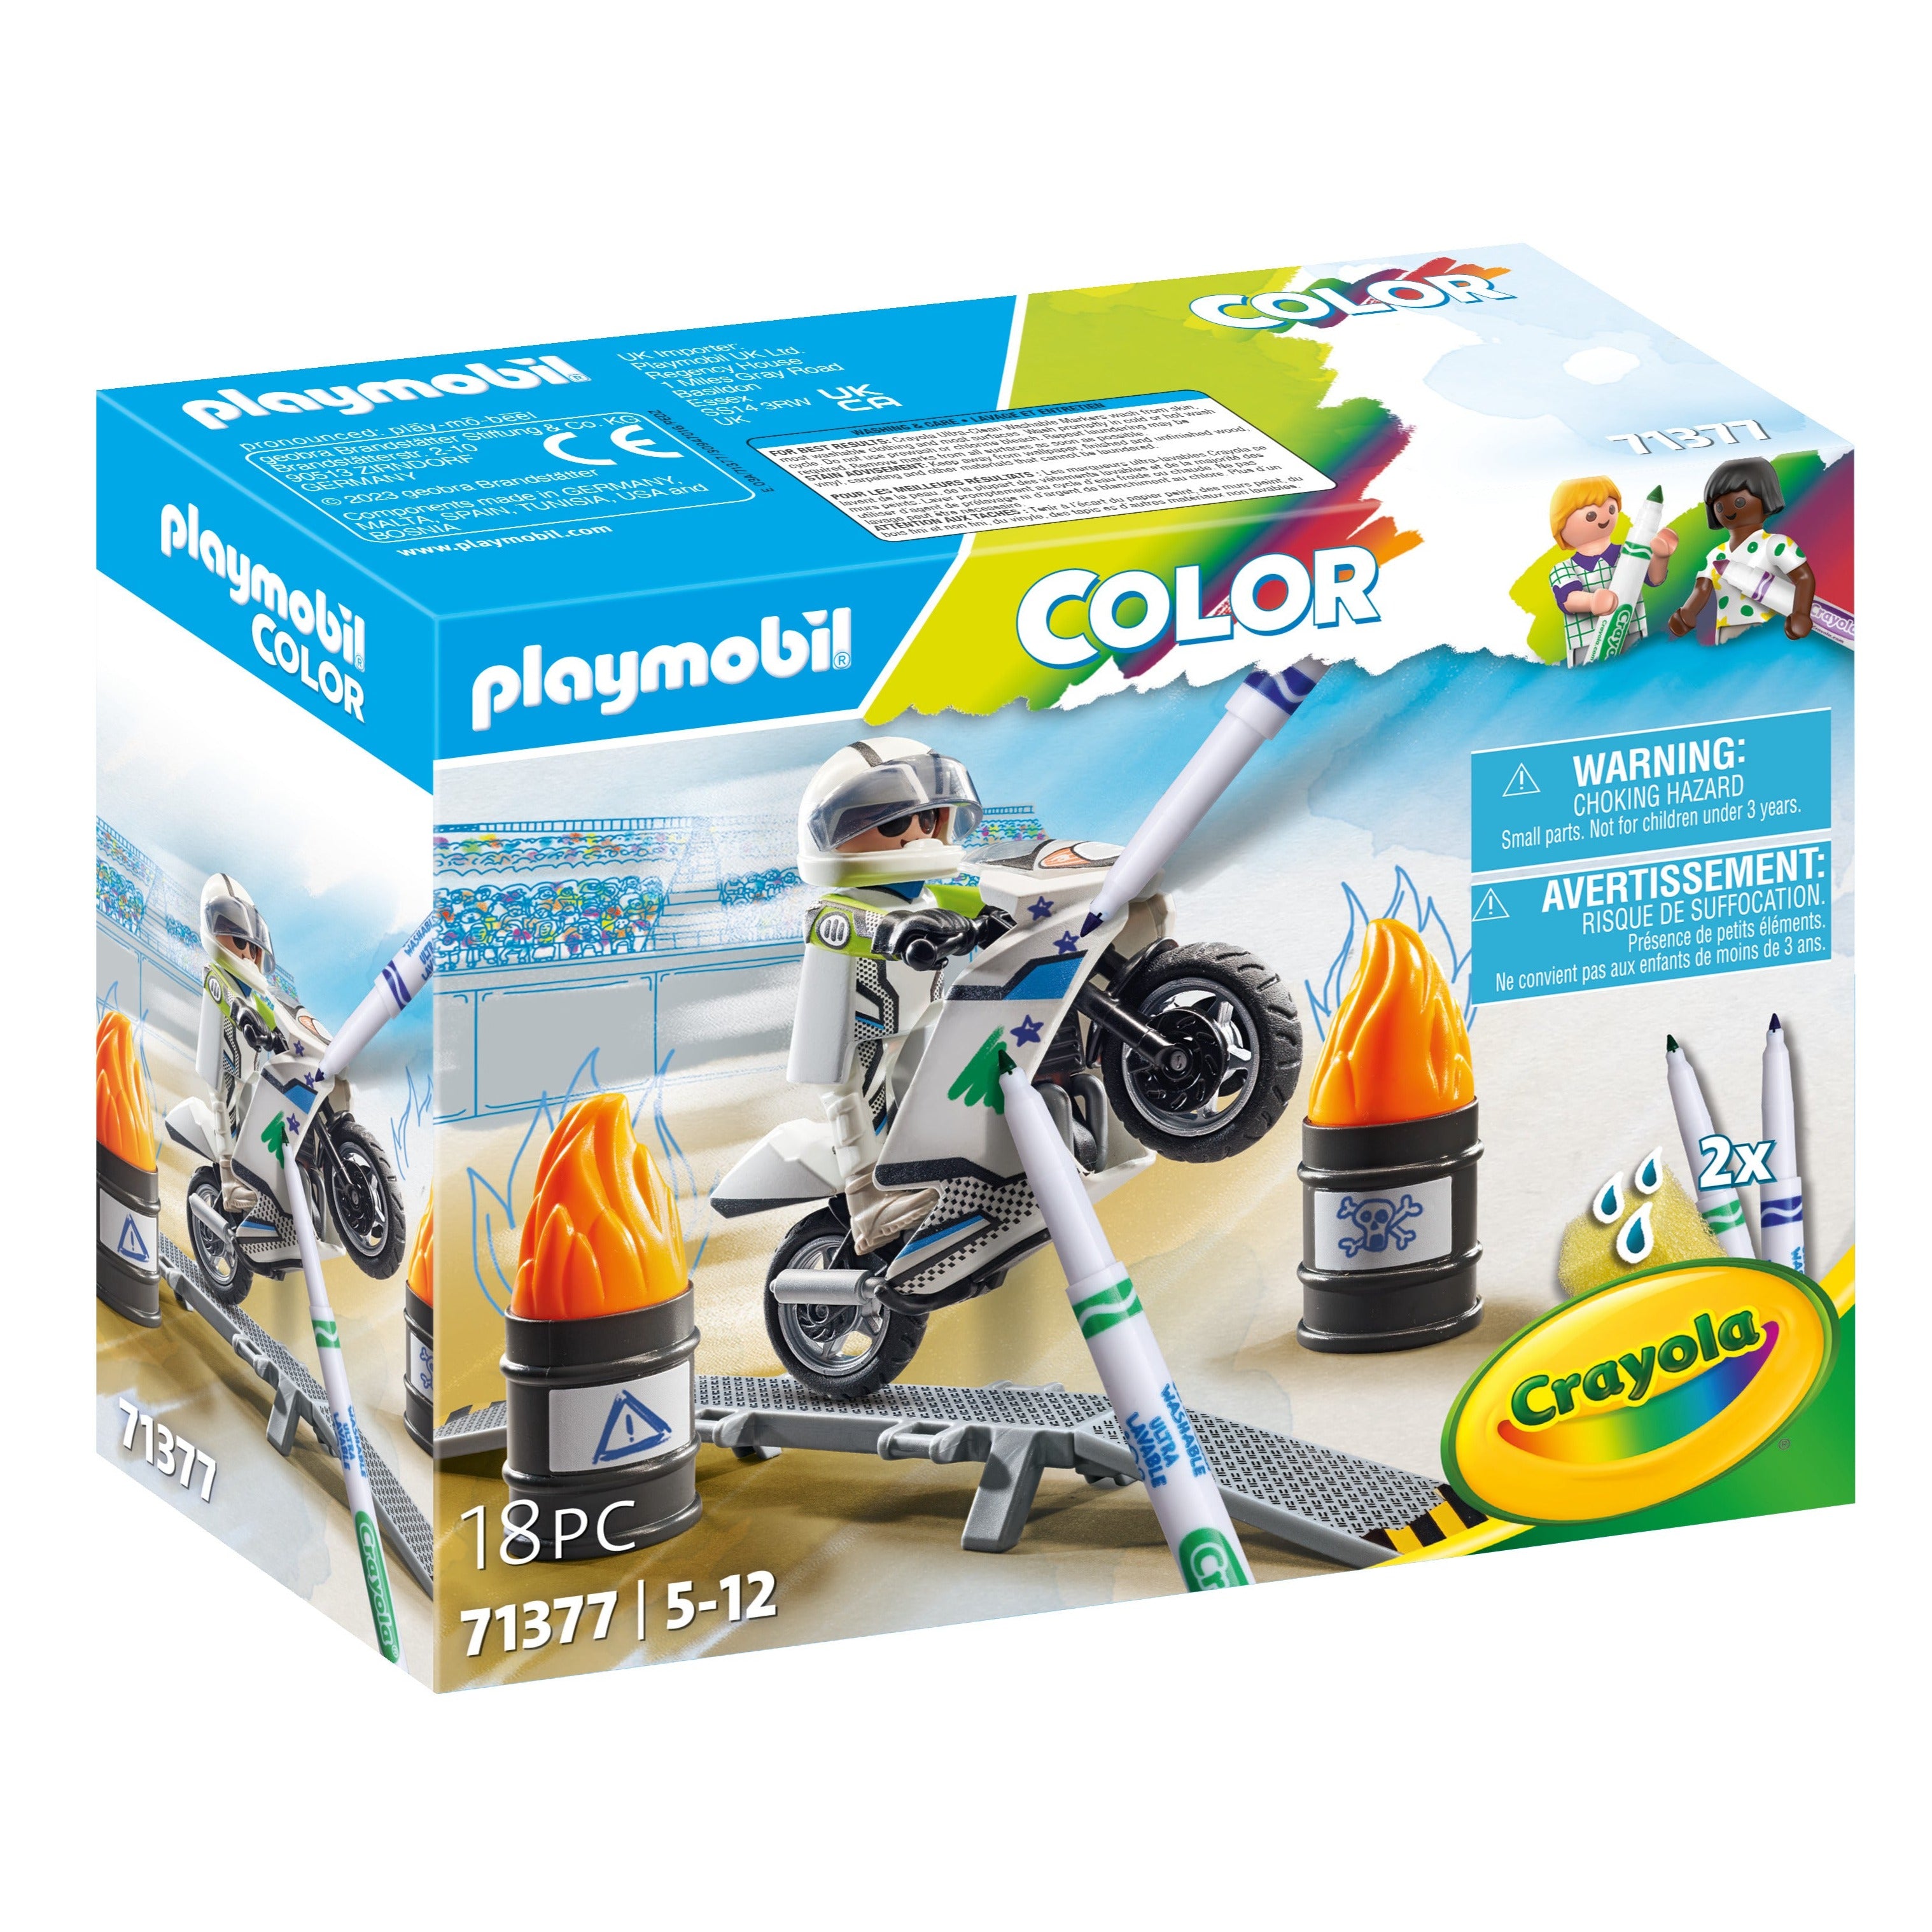 PlayMobil: Color PlayMobil X Crayola Motorcycle